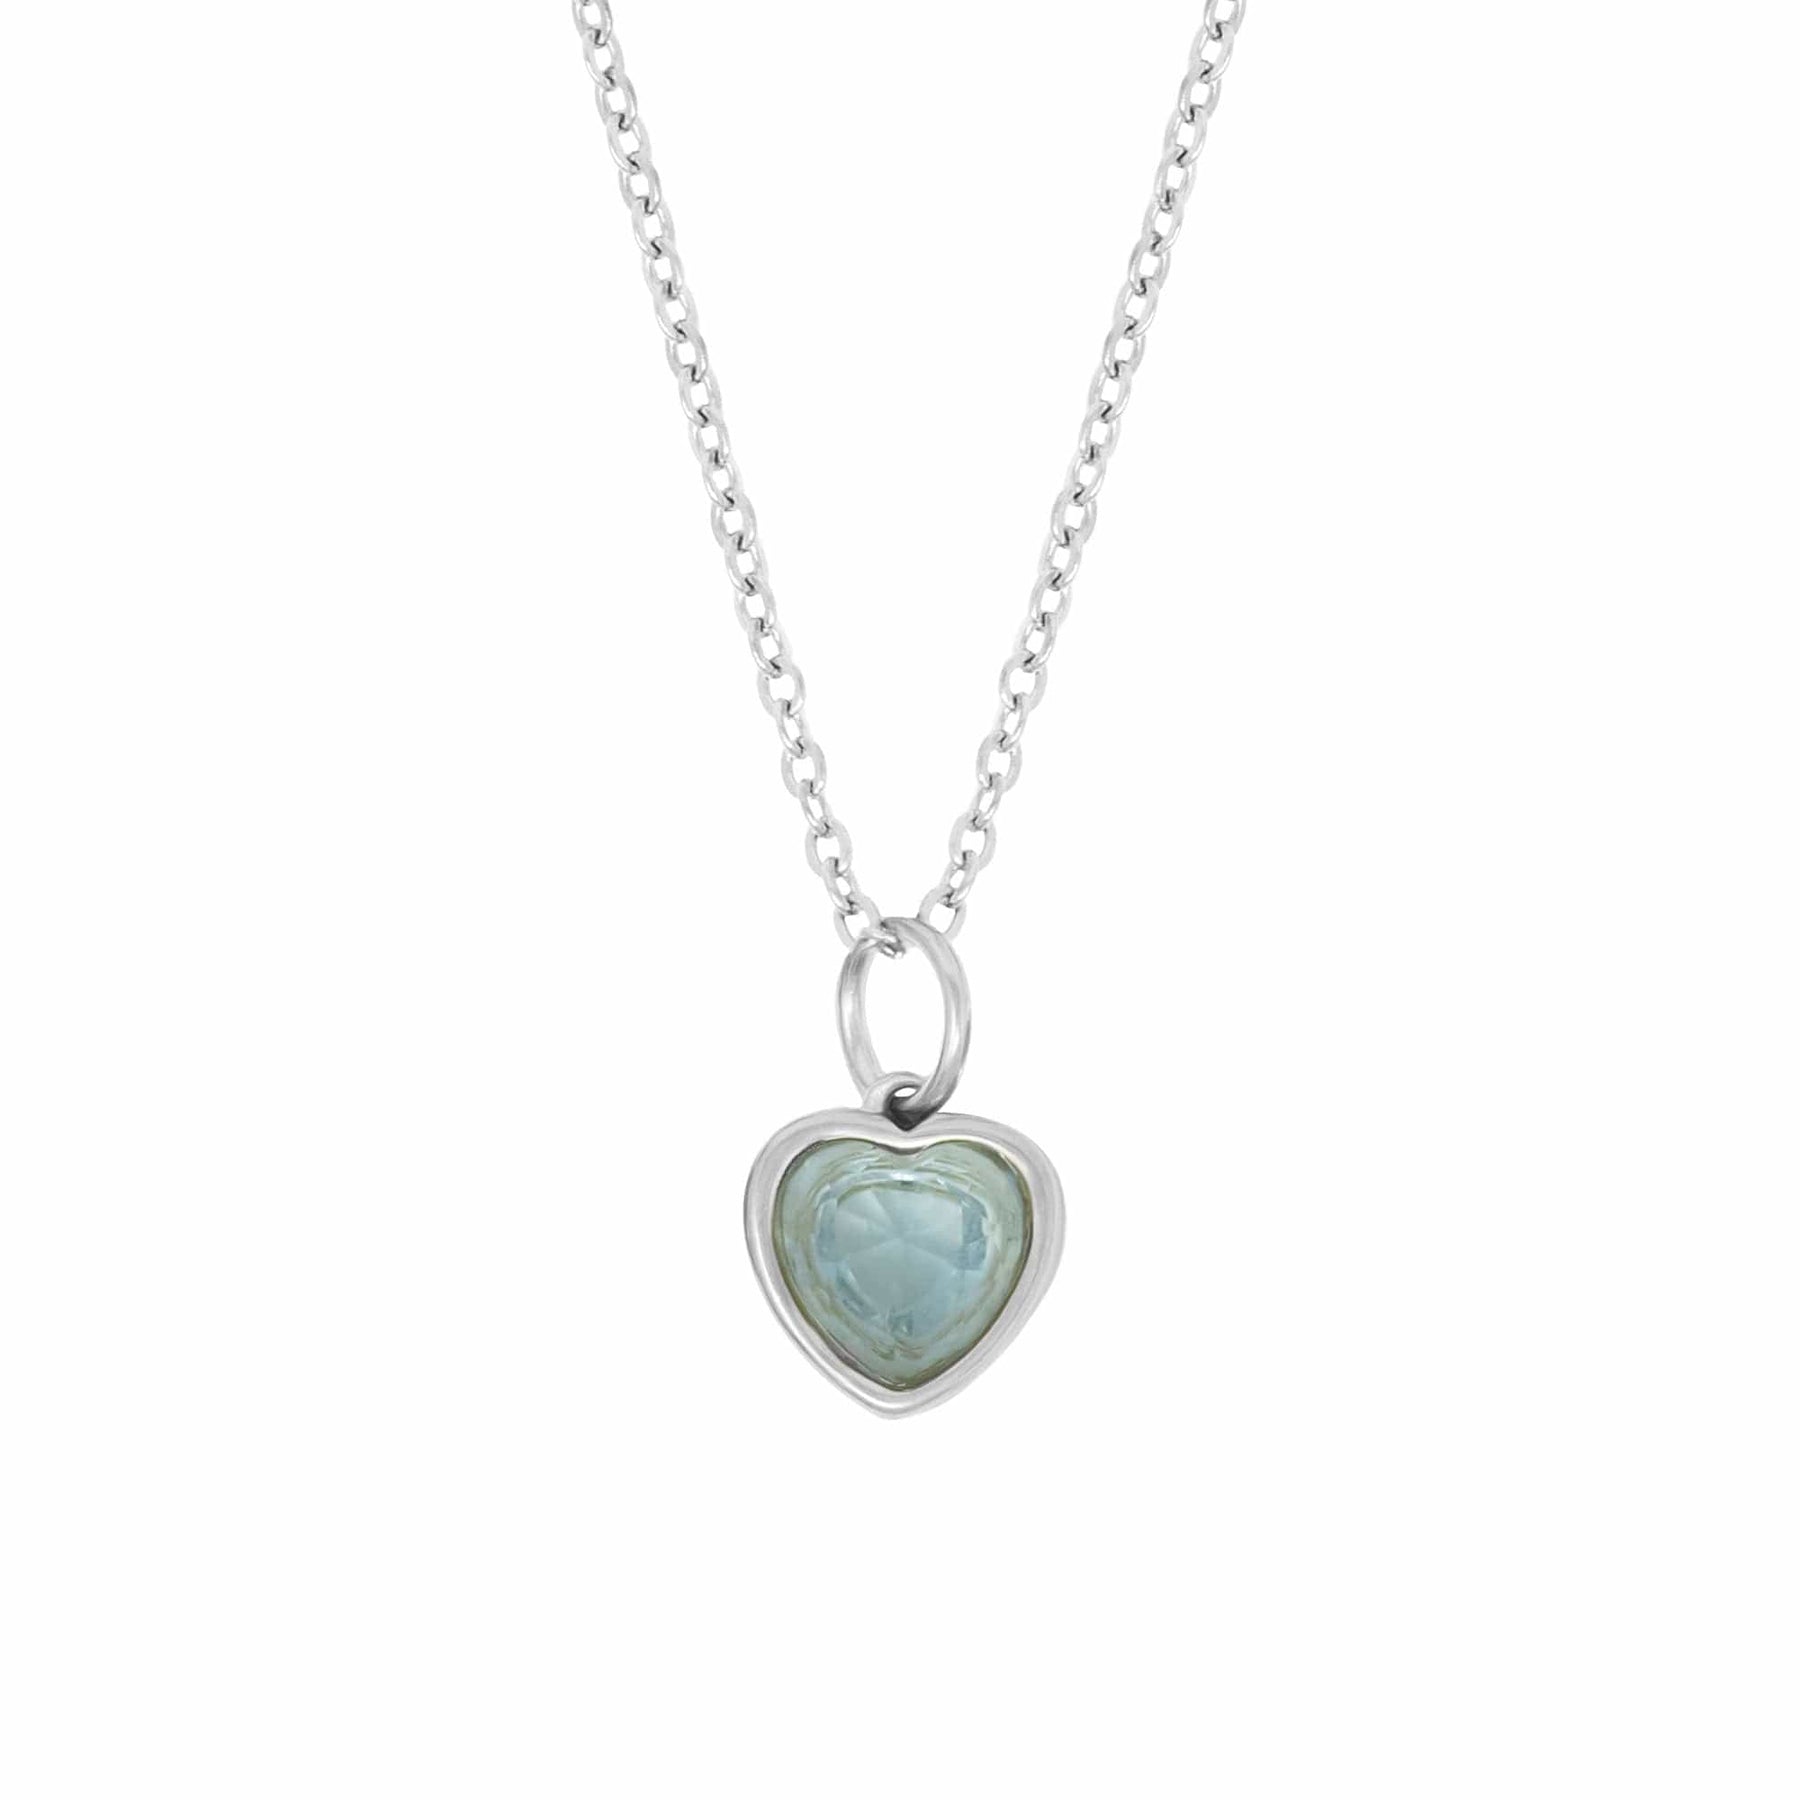 BohoMoon Stainless Steel Love Heart Birthstone Necklace Silver / December